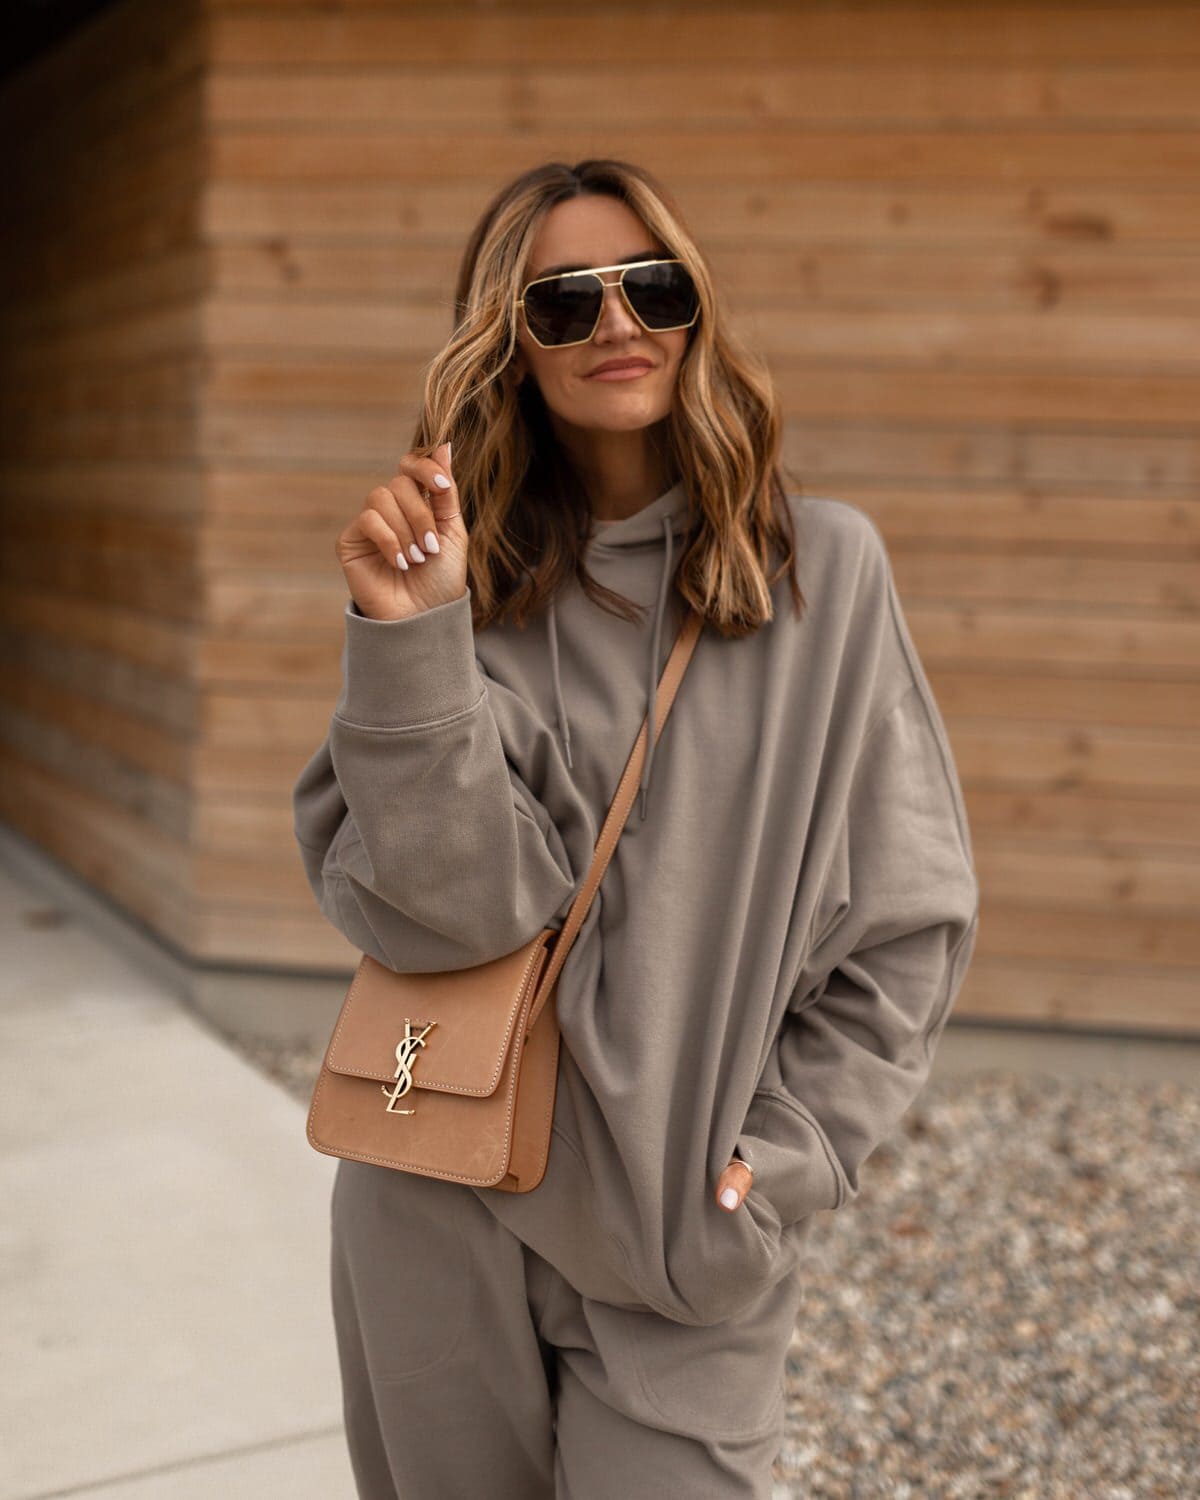 Karina wears grey calvin klein matching sweatpant and sweatshirt with ysl bag